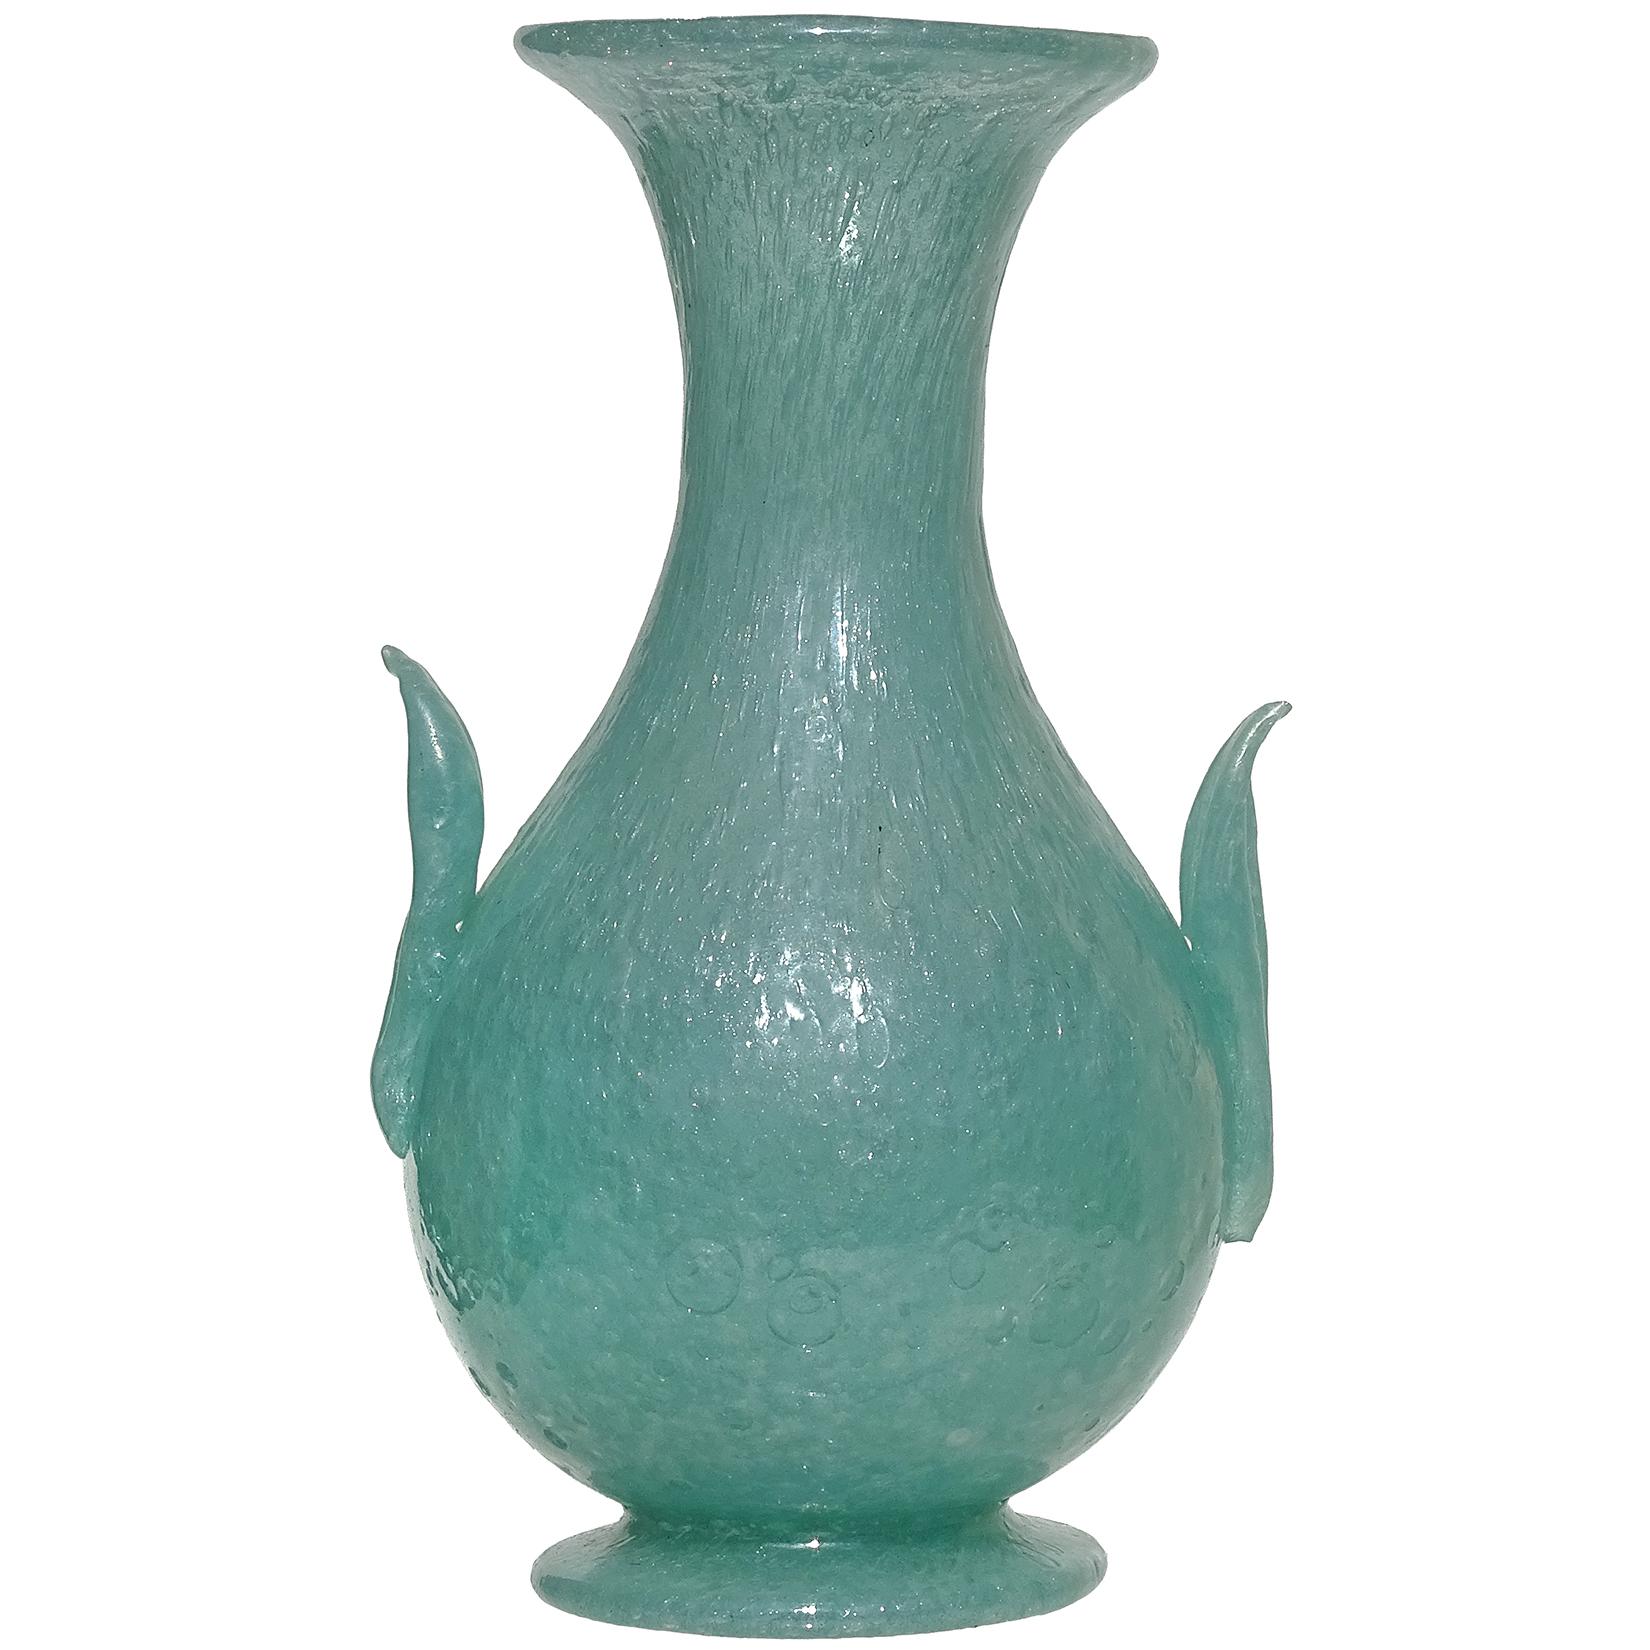 A.Ve.M. Murano 1932 Teal Green Pulegoso Bubbles Italian Art Glass Flower Vase